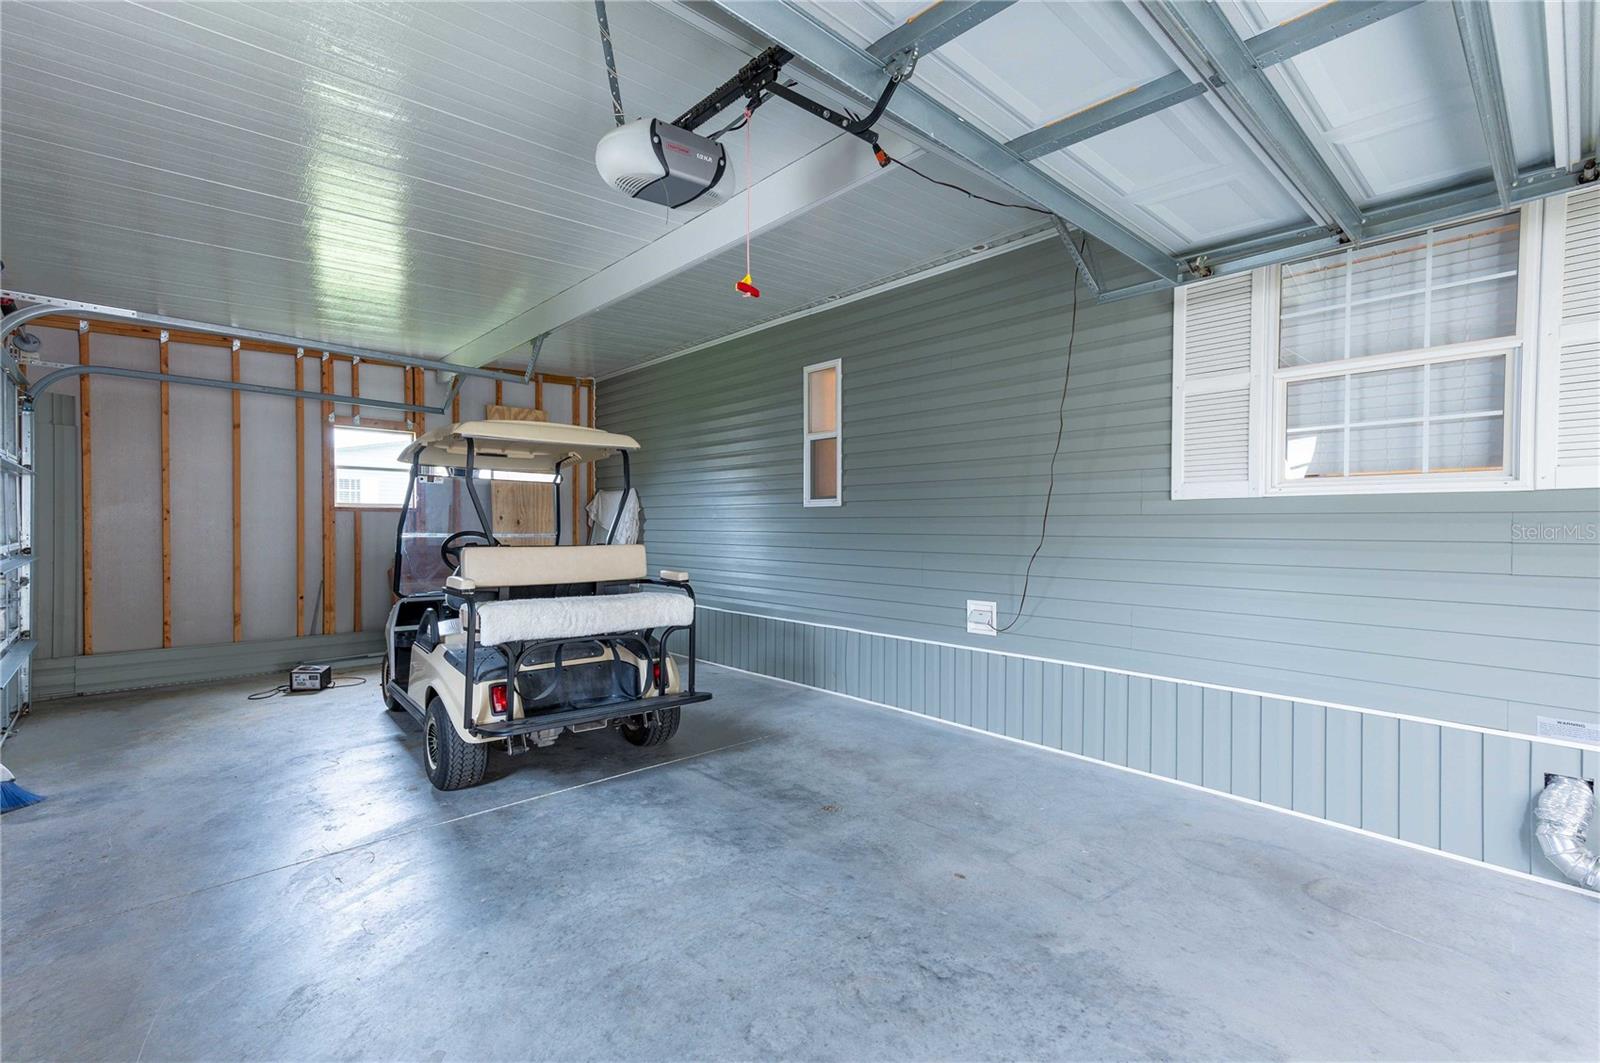 Two car garage and golf cart storage.